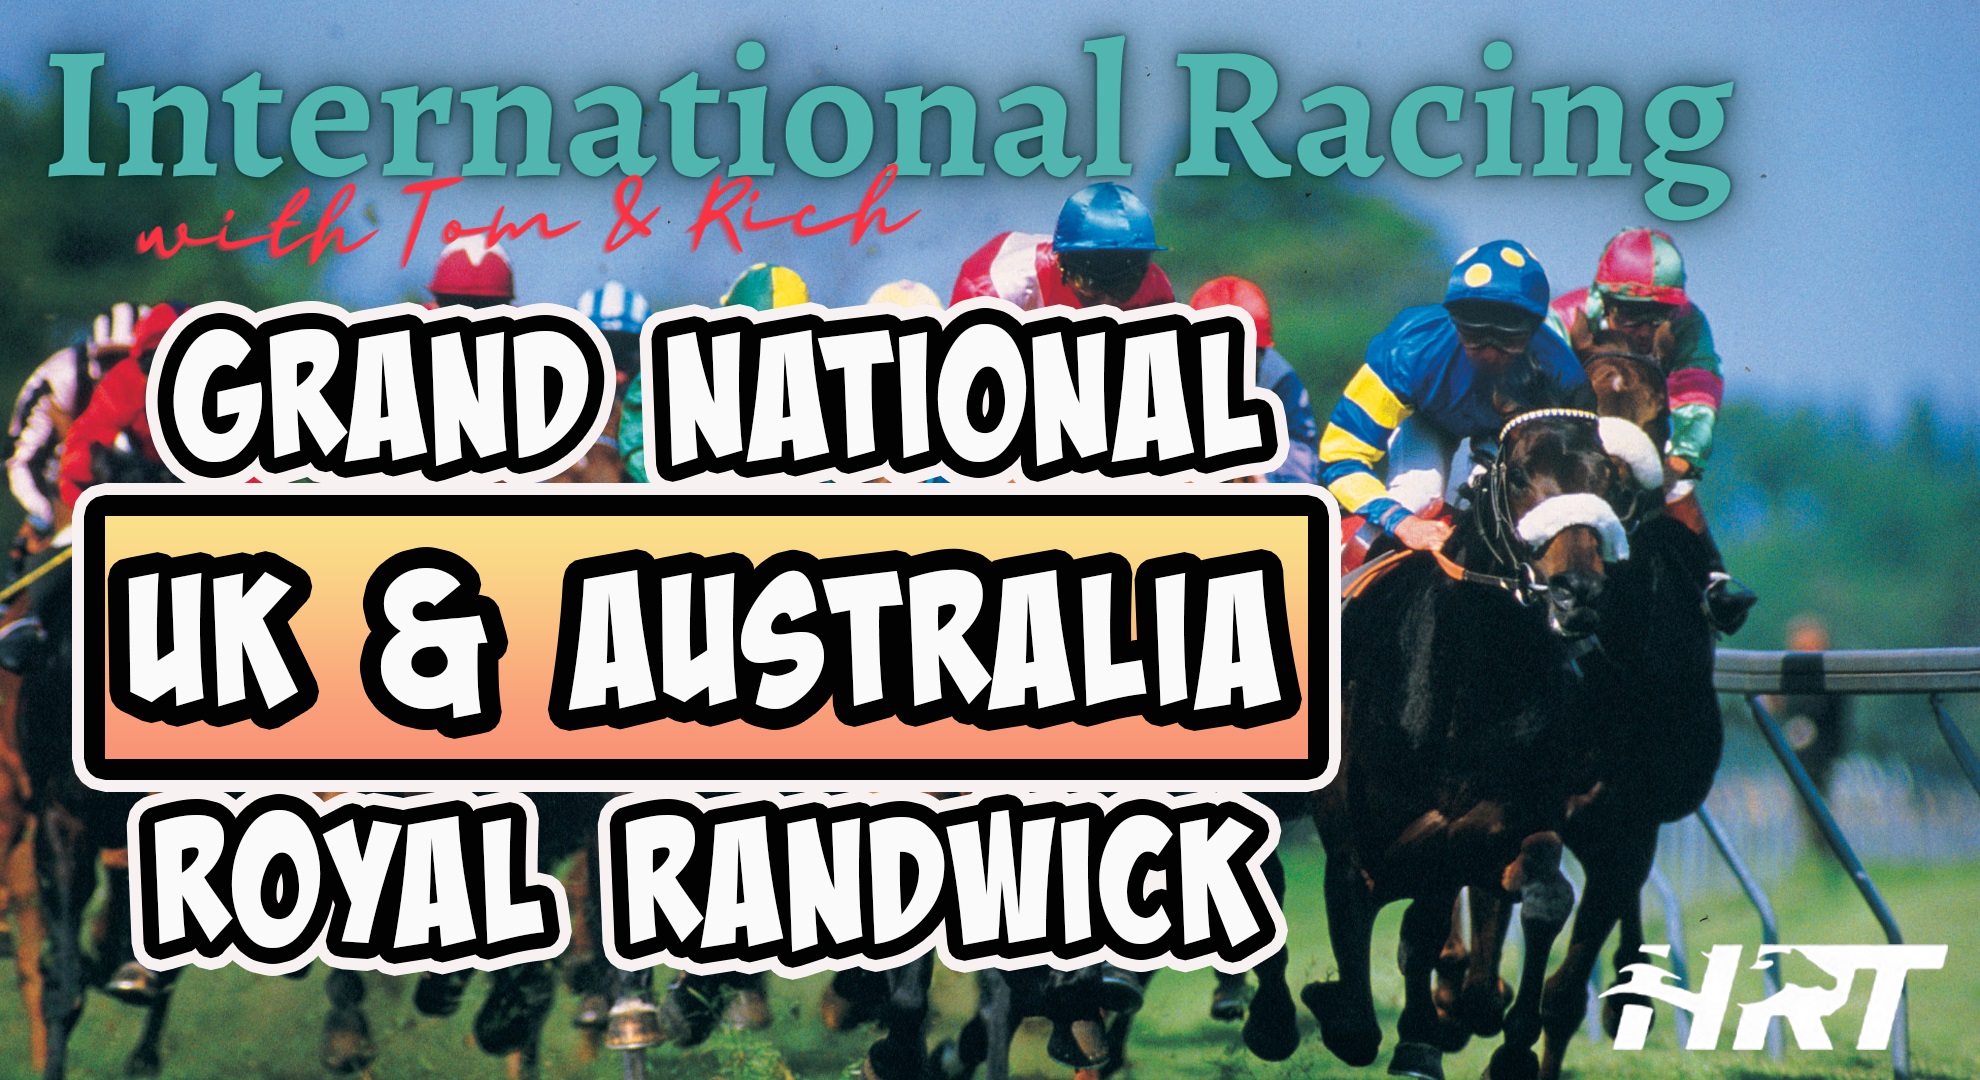 Royal Randwick and Grand National Horse Racing Picks